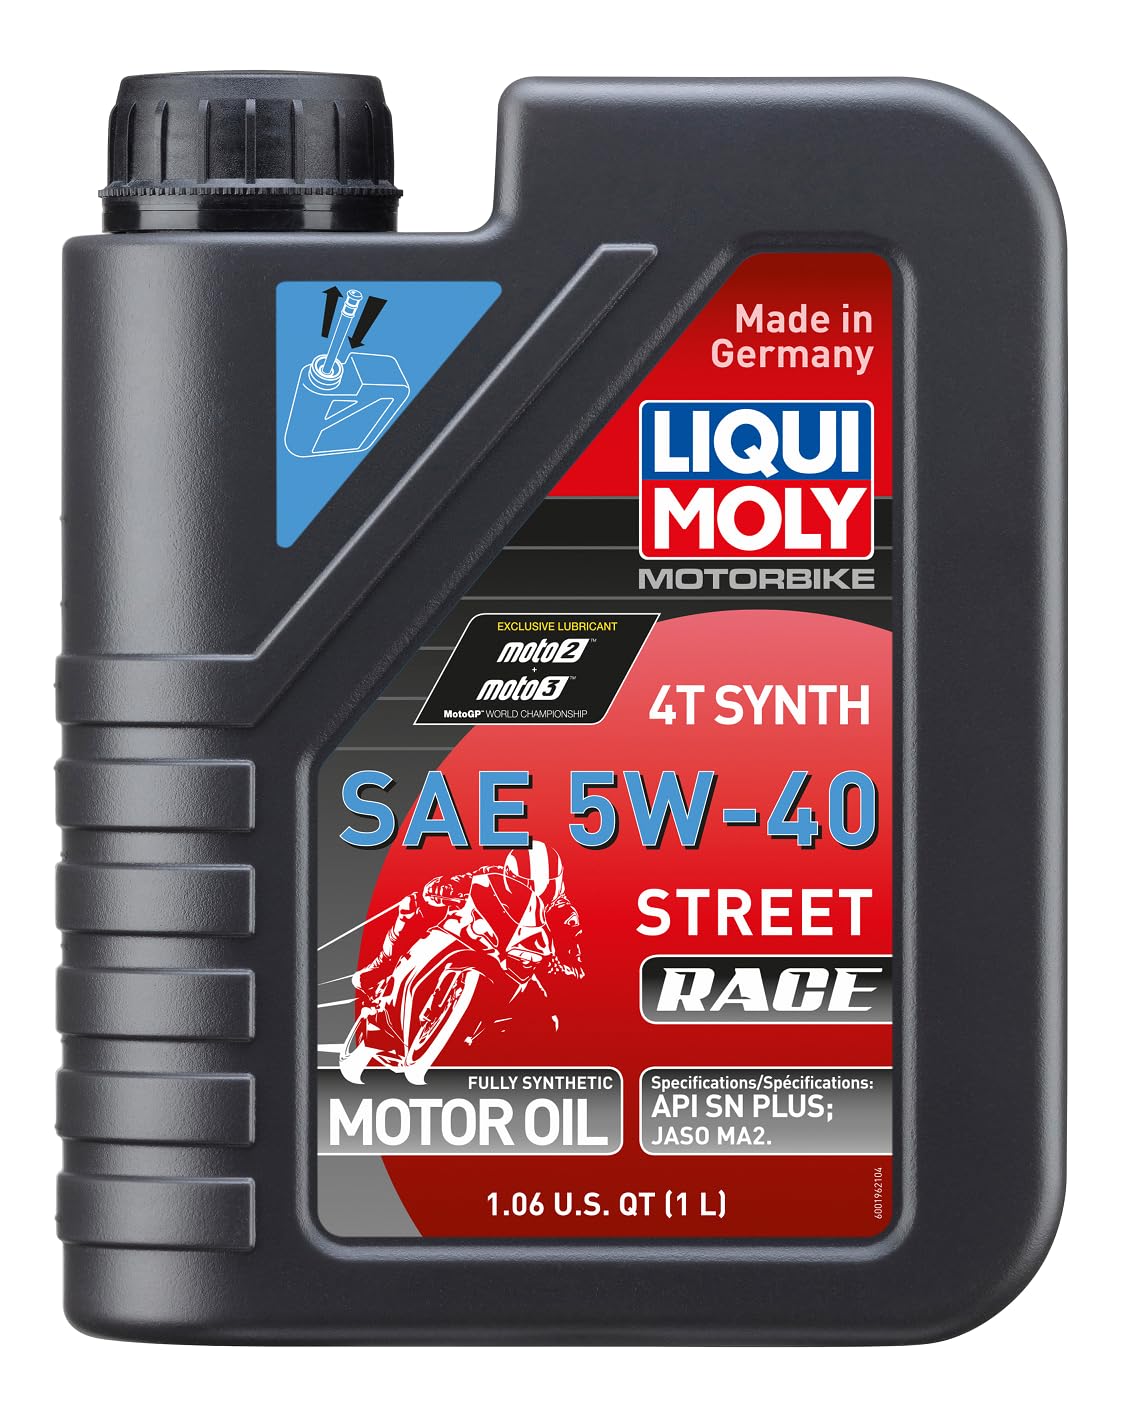 LIQUI MOLY Motorbike 4T Synth 5W-40 Street Race | 1 L | Motorrad vollsynthetisches Motoröl | Art.-Nr.: 2592 von Liqui Moly